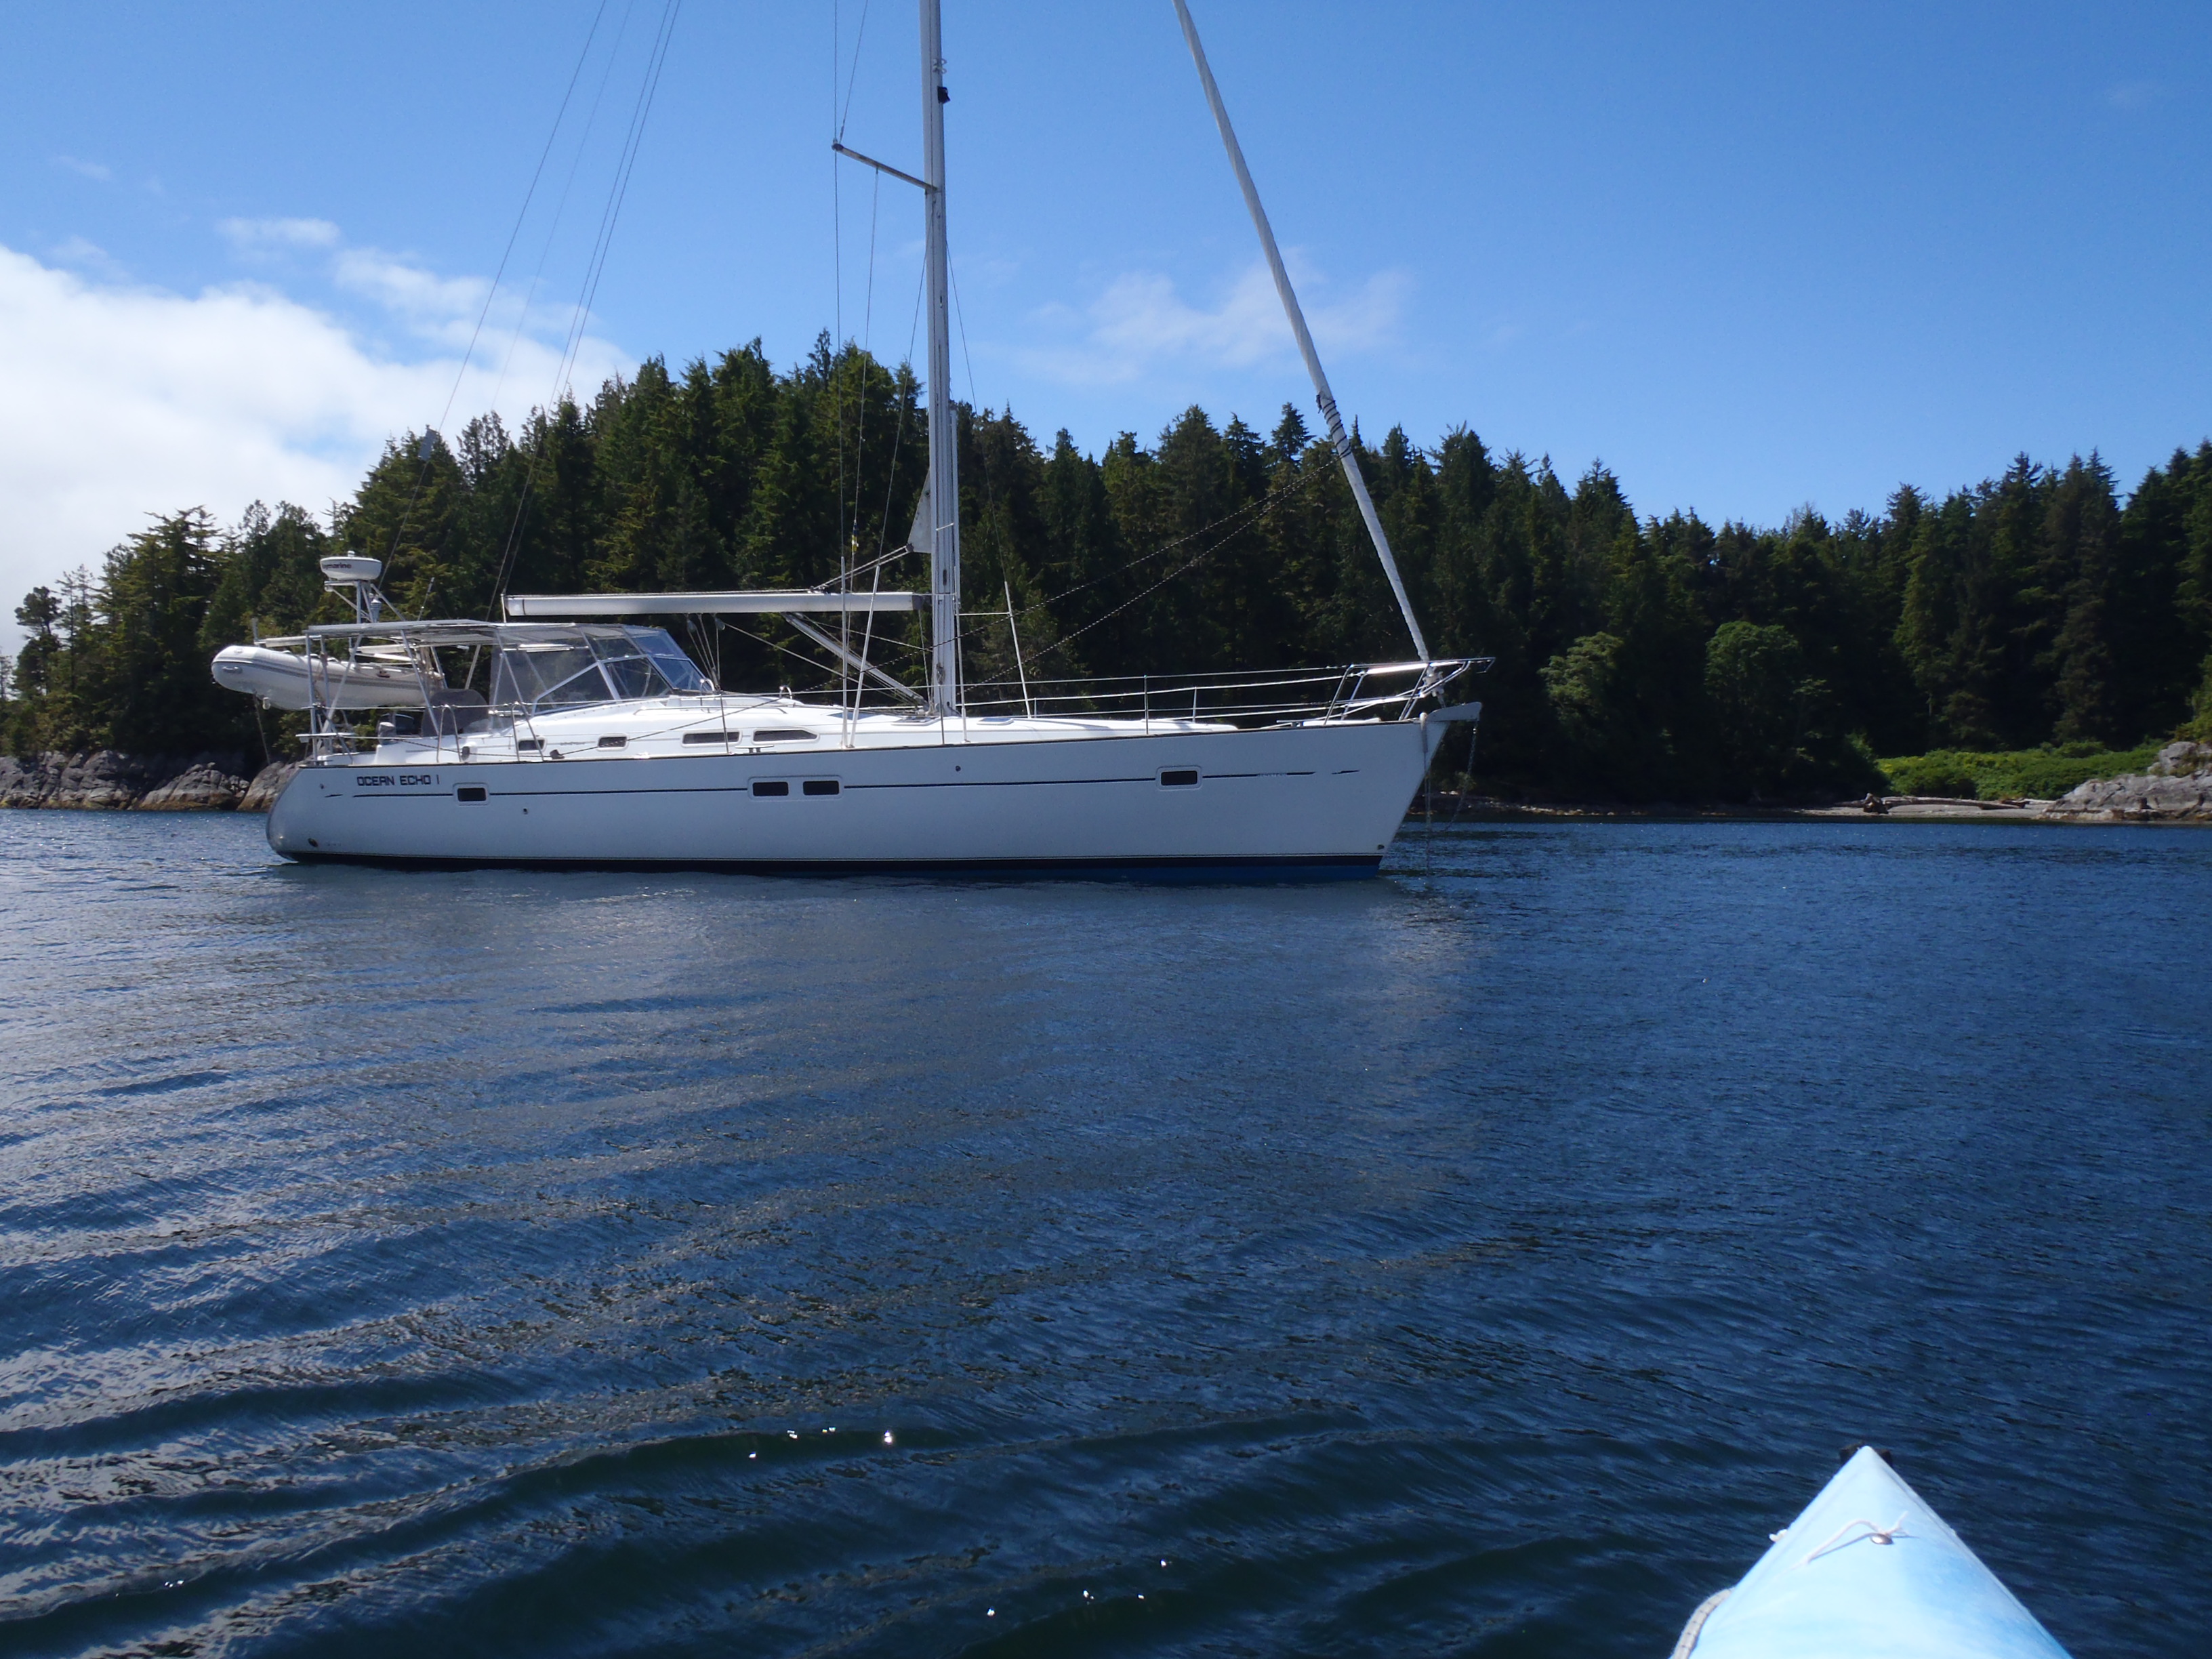 2007 Beneteau 423 Sailboat for sale in British Columbia, Canada - image 7 